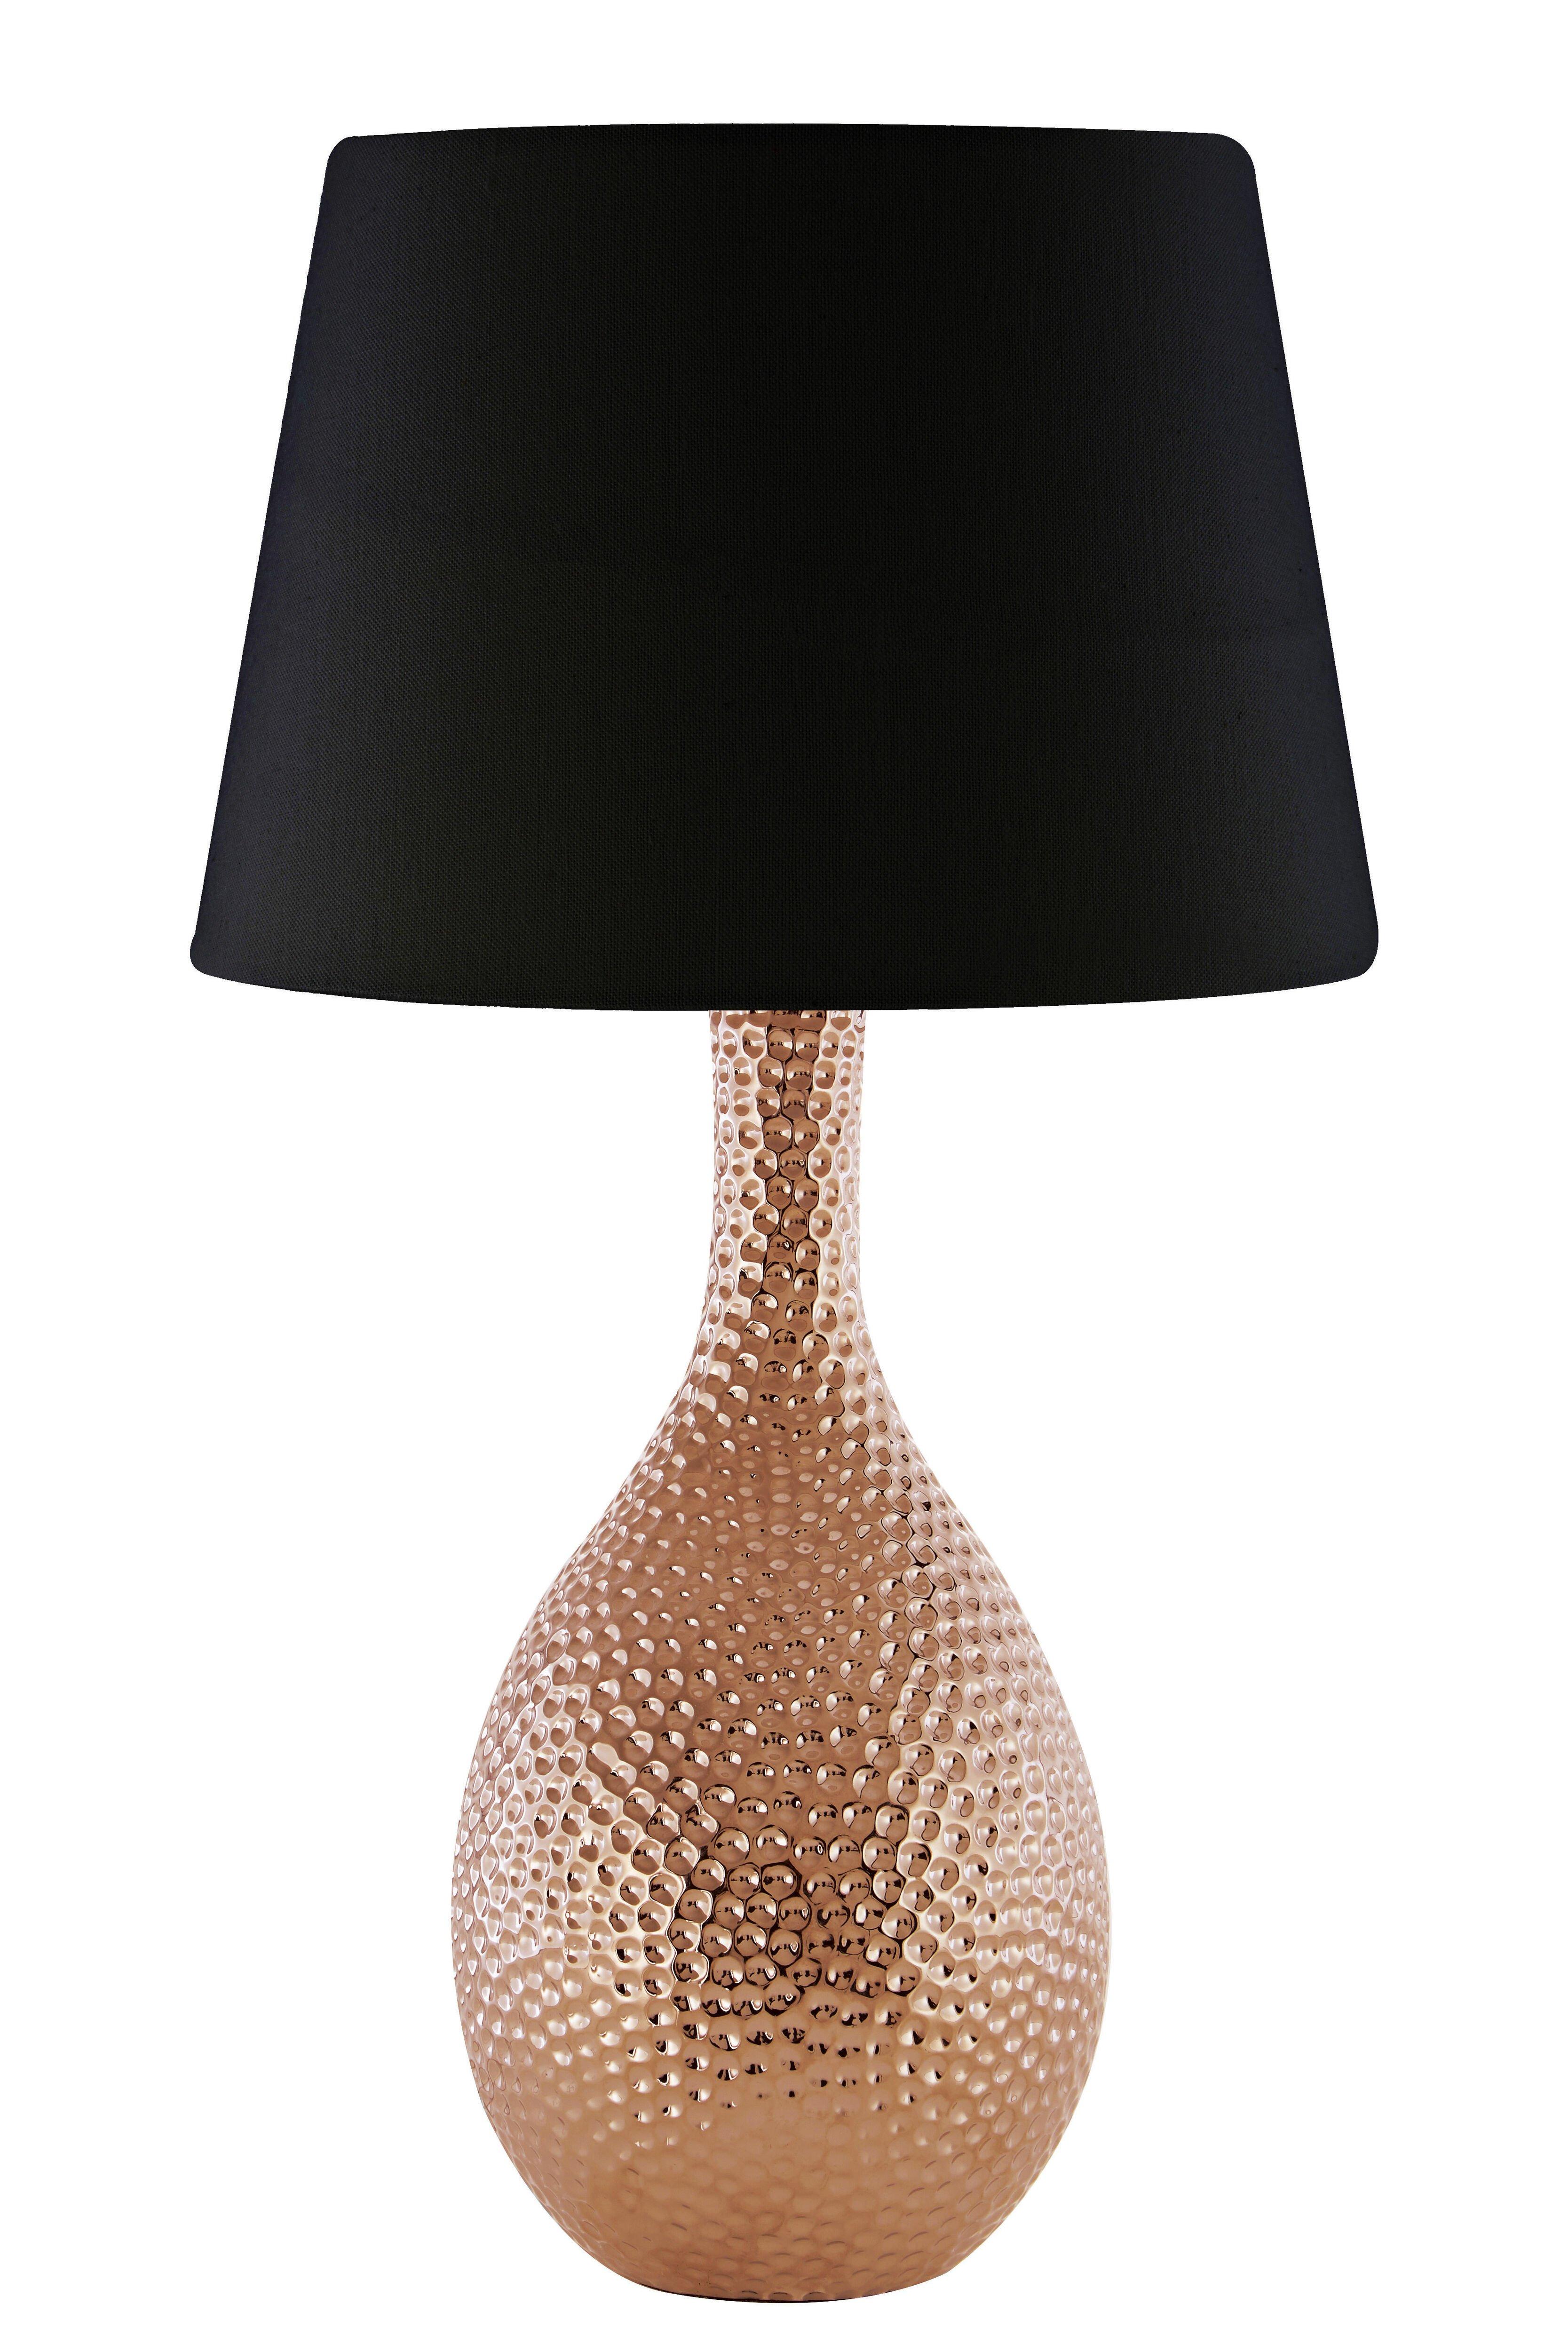 Interiors by Premier Julius Copper Hammered Ceramic Table Lamp